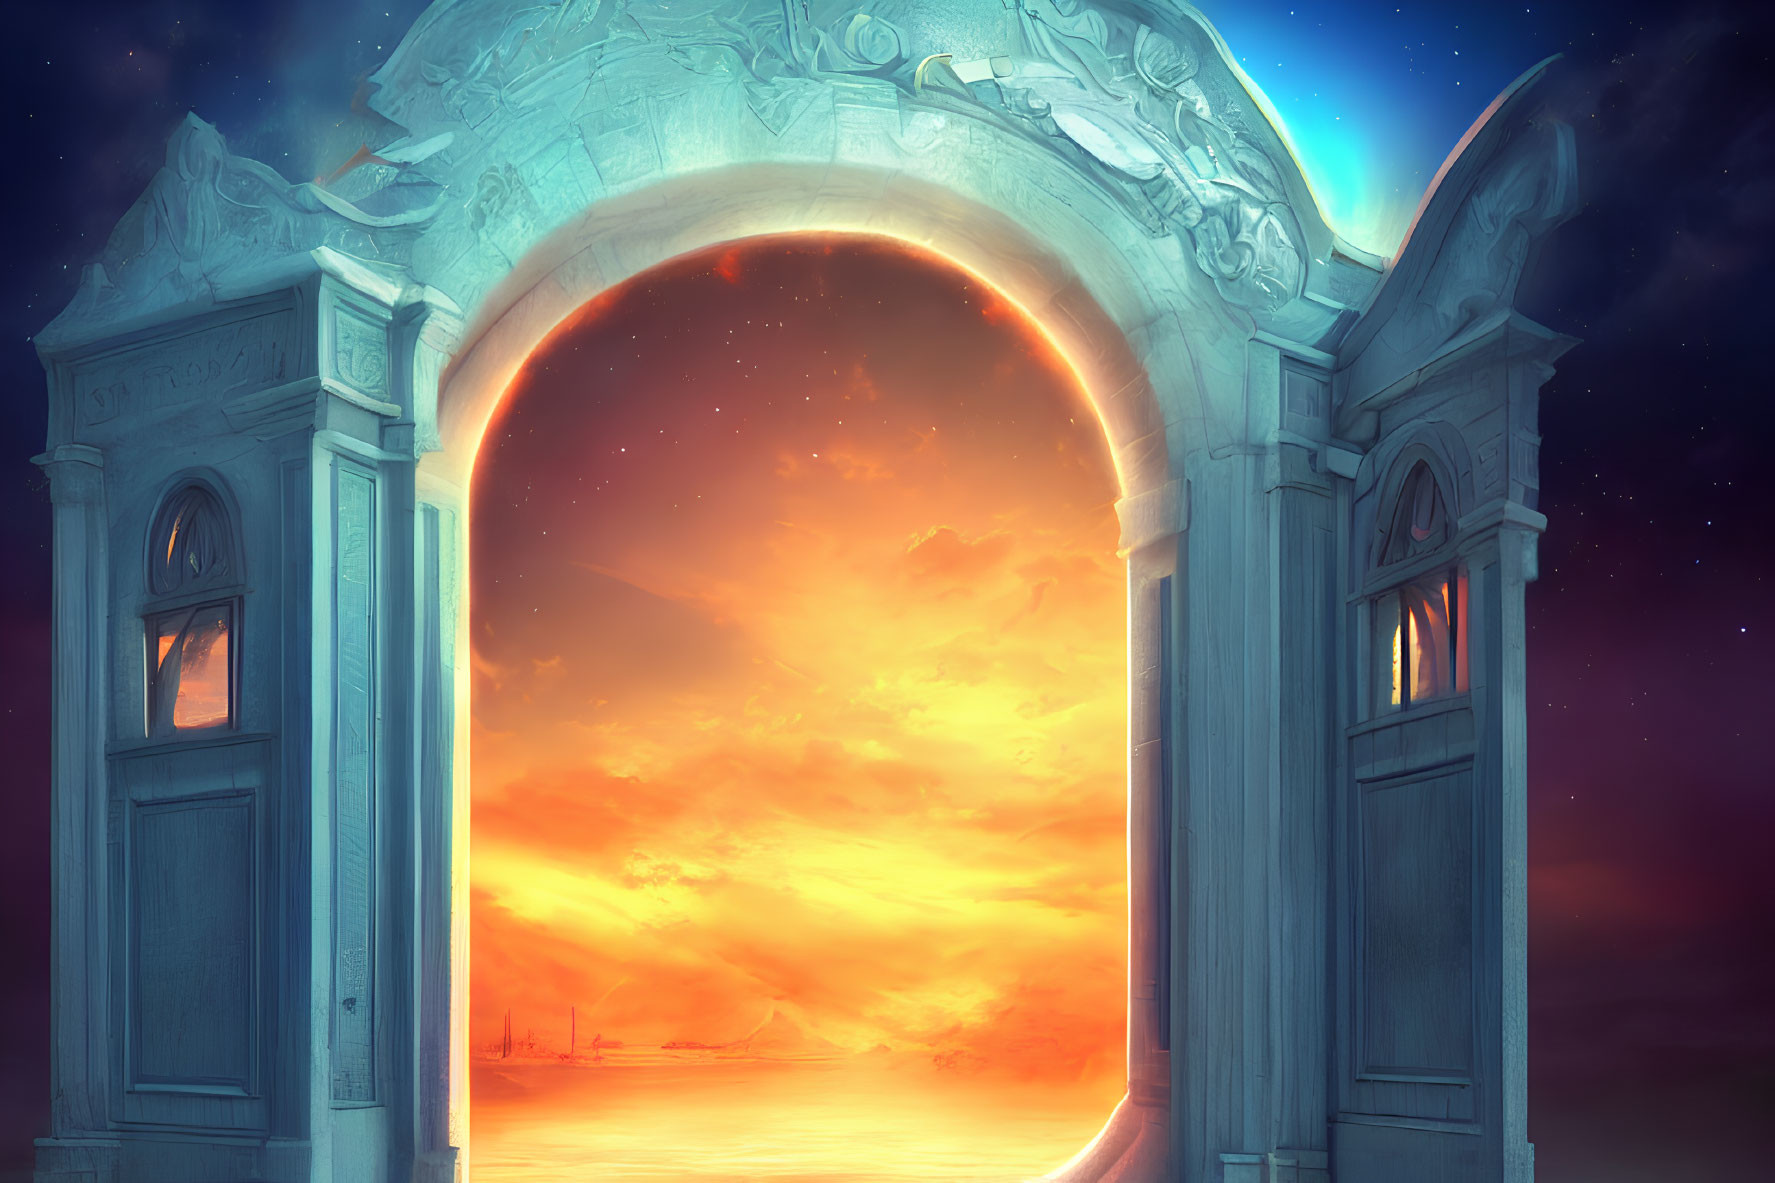 Stone archway frames starlit sky with orange nebula. Twilight backdrop.